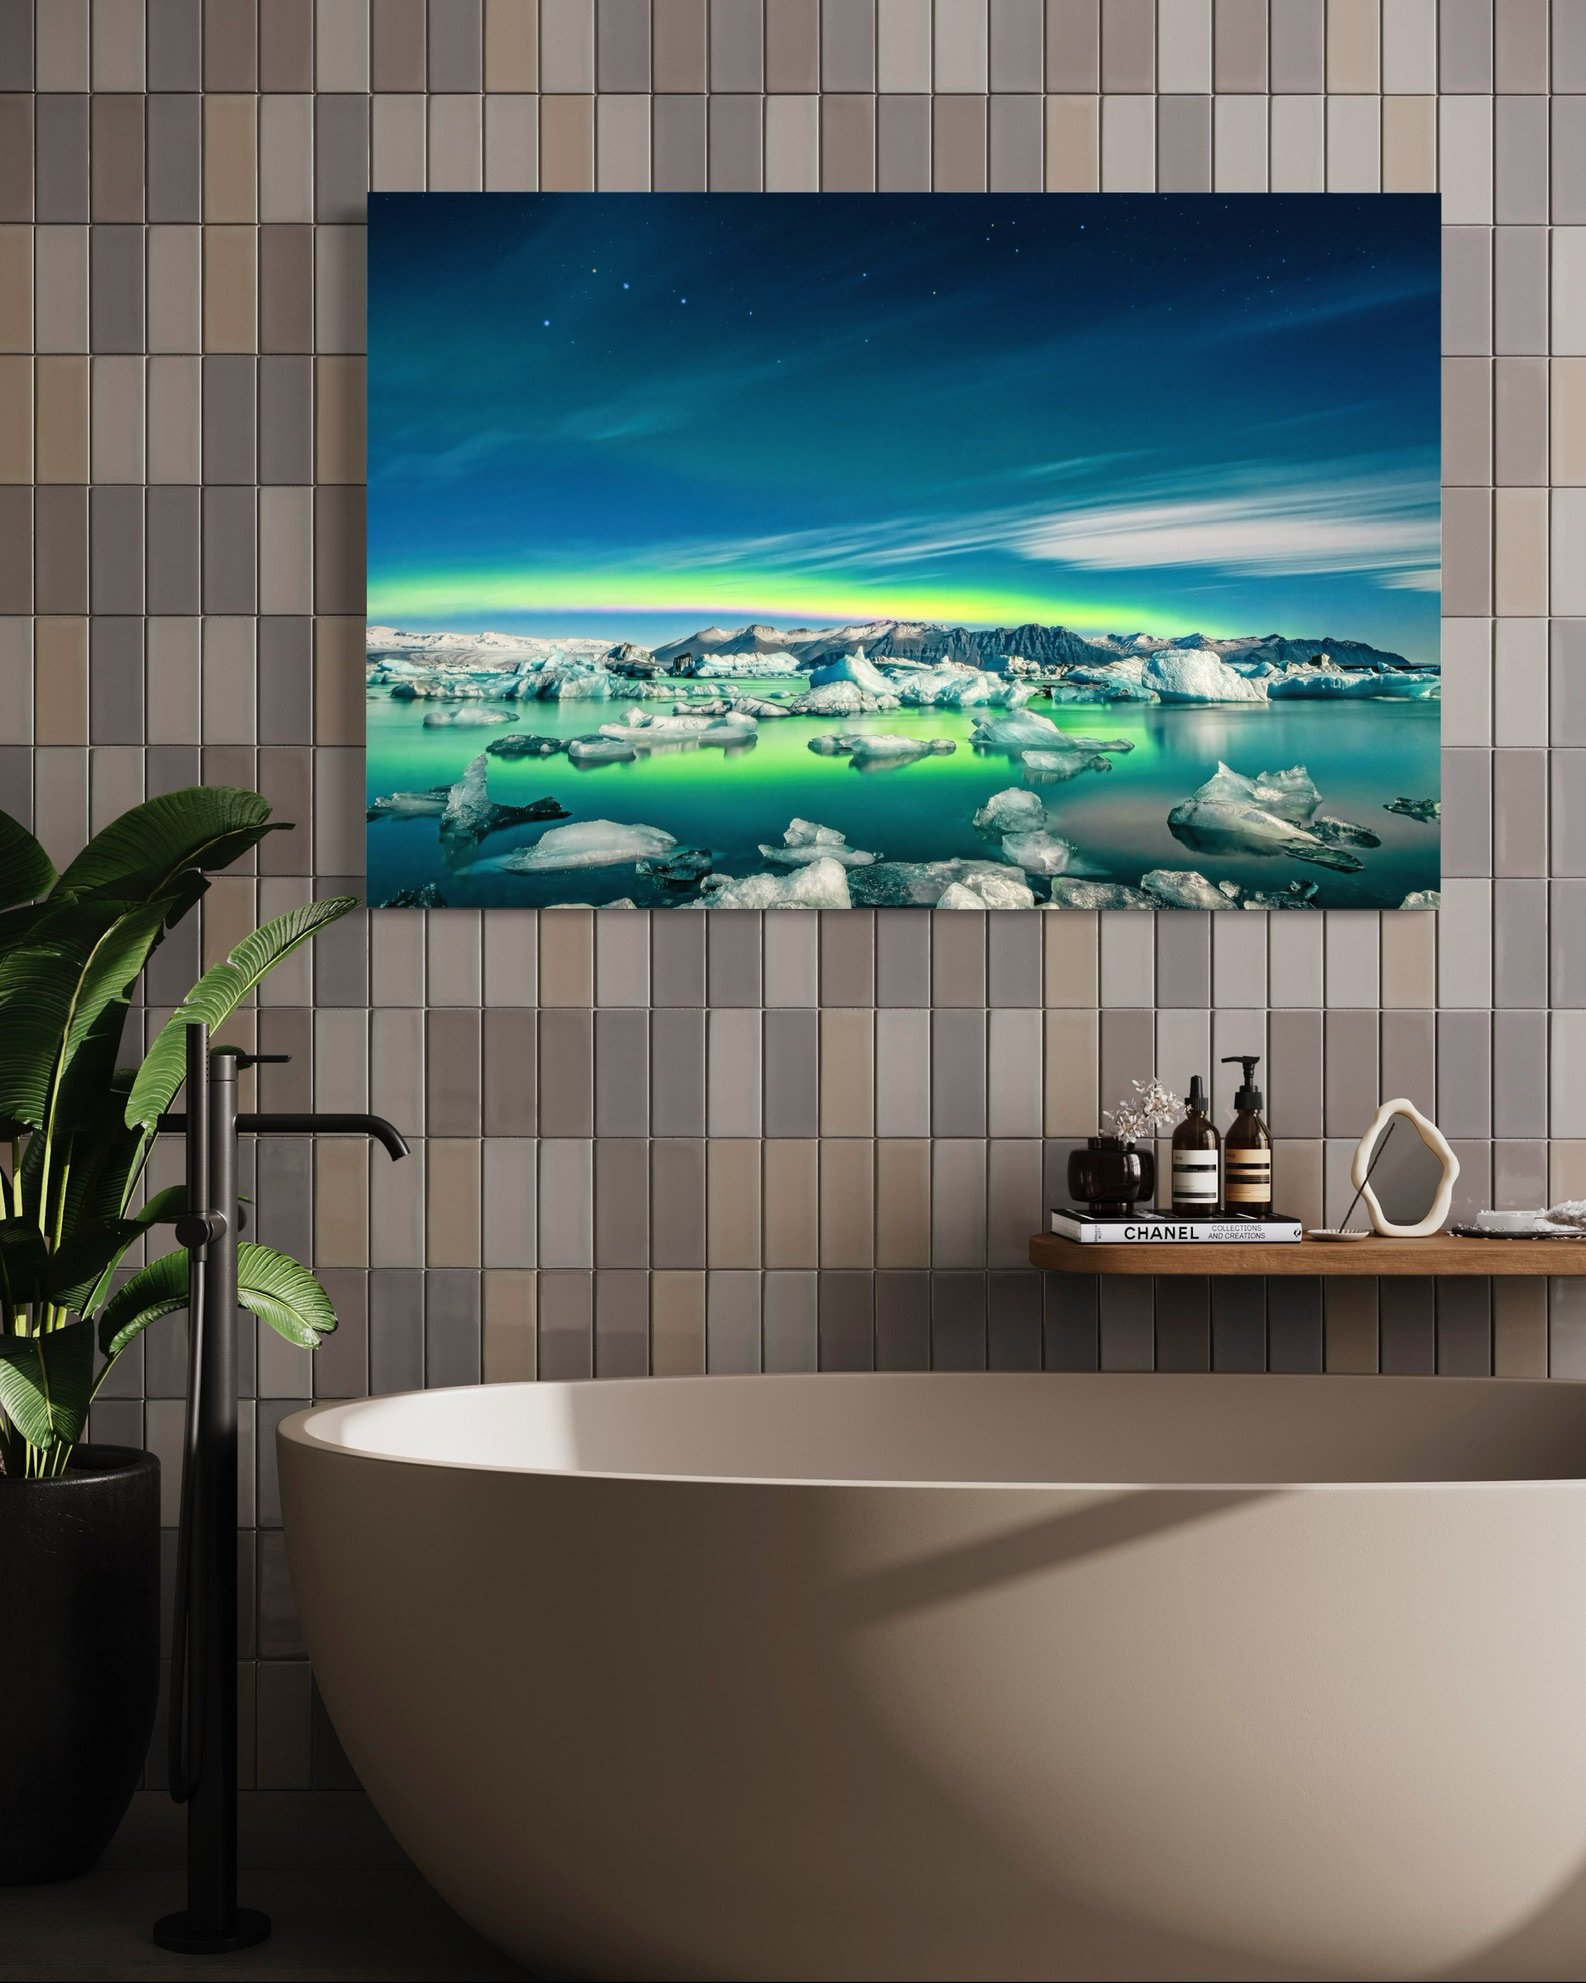 Northern Lights Diamond Beach Iceland - Bathroom Wall Art.jpg